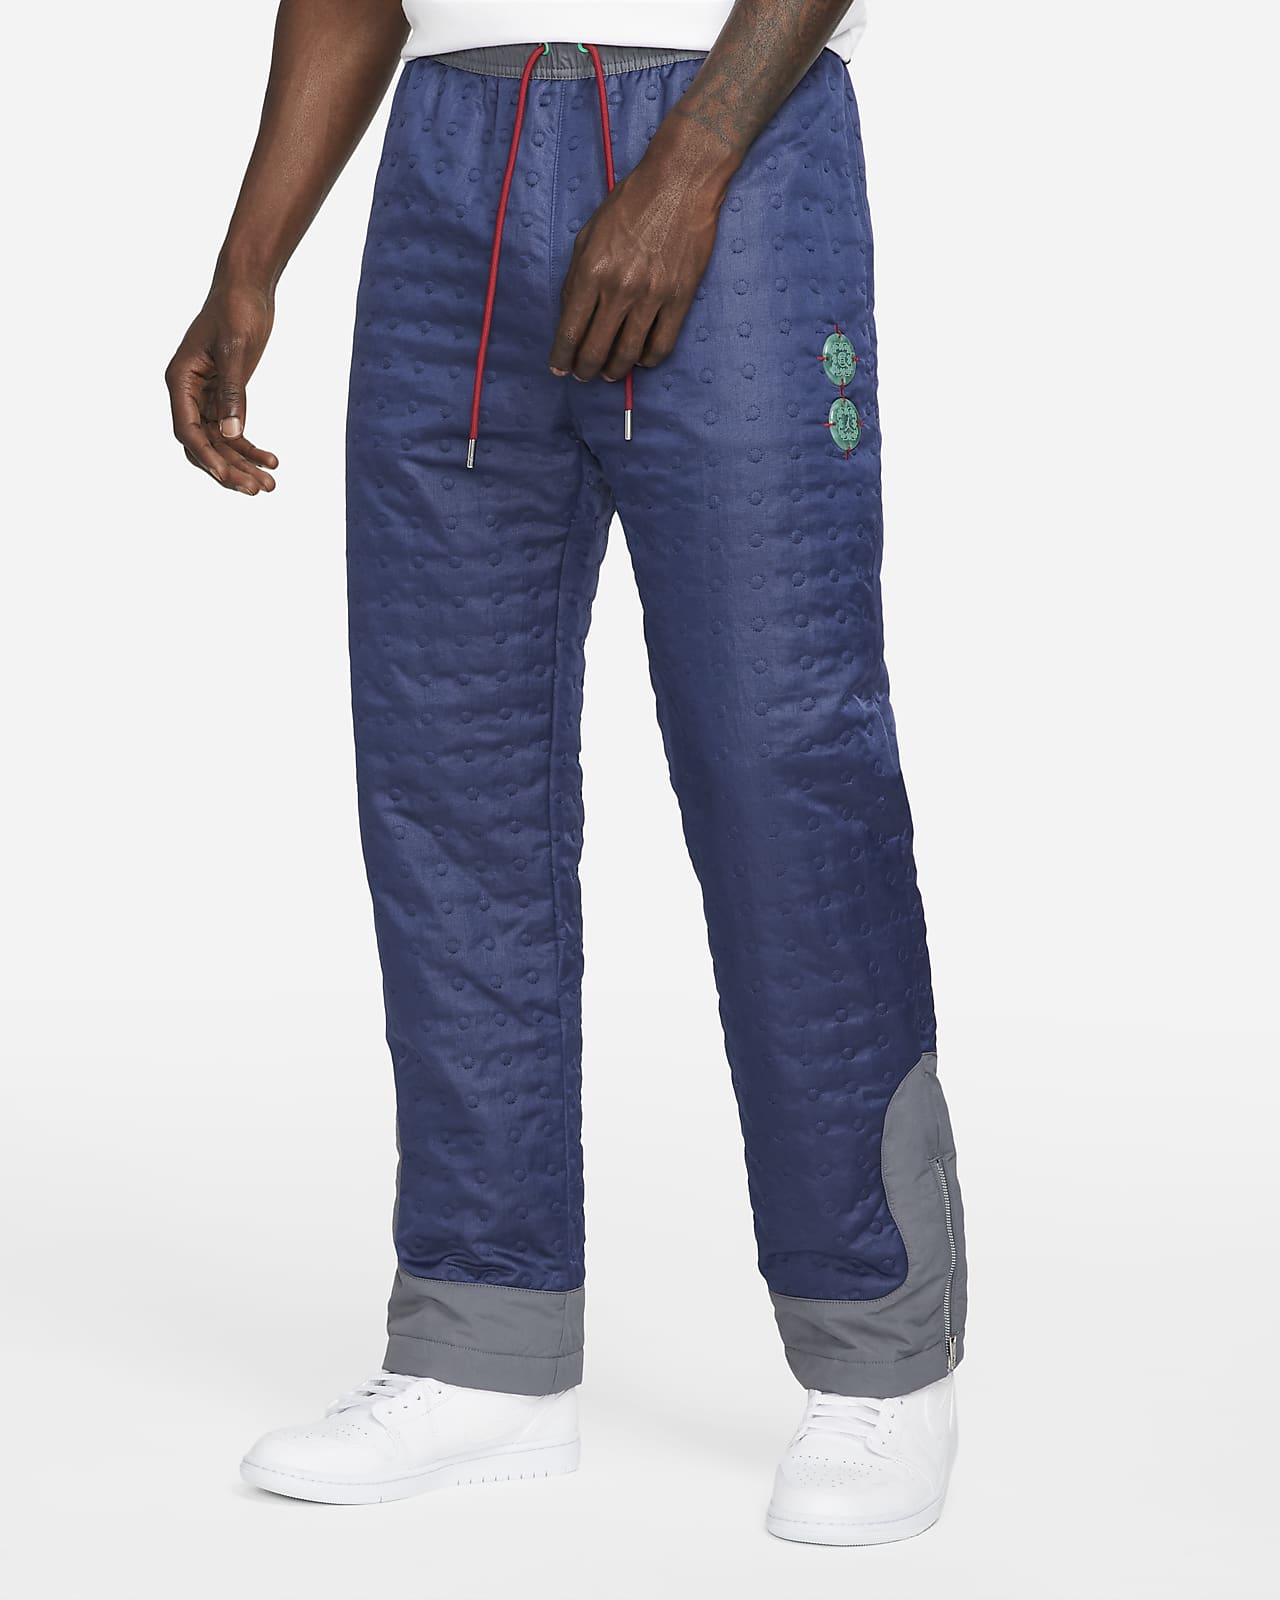 tejido Woven para hombre Jordan CLOT. Nike.com